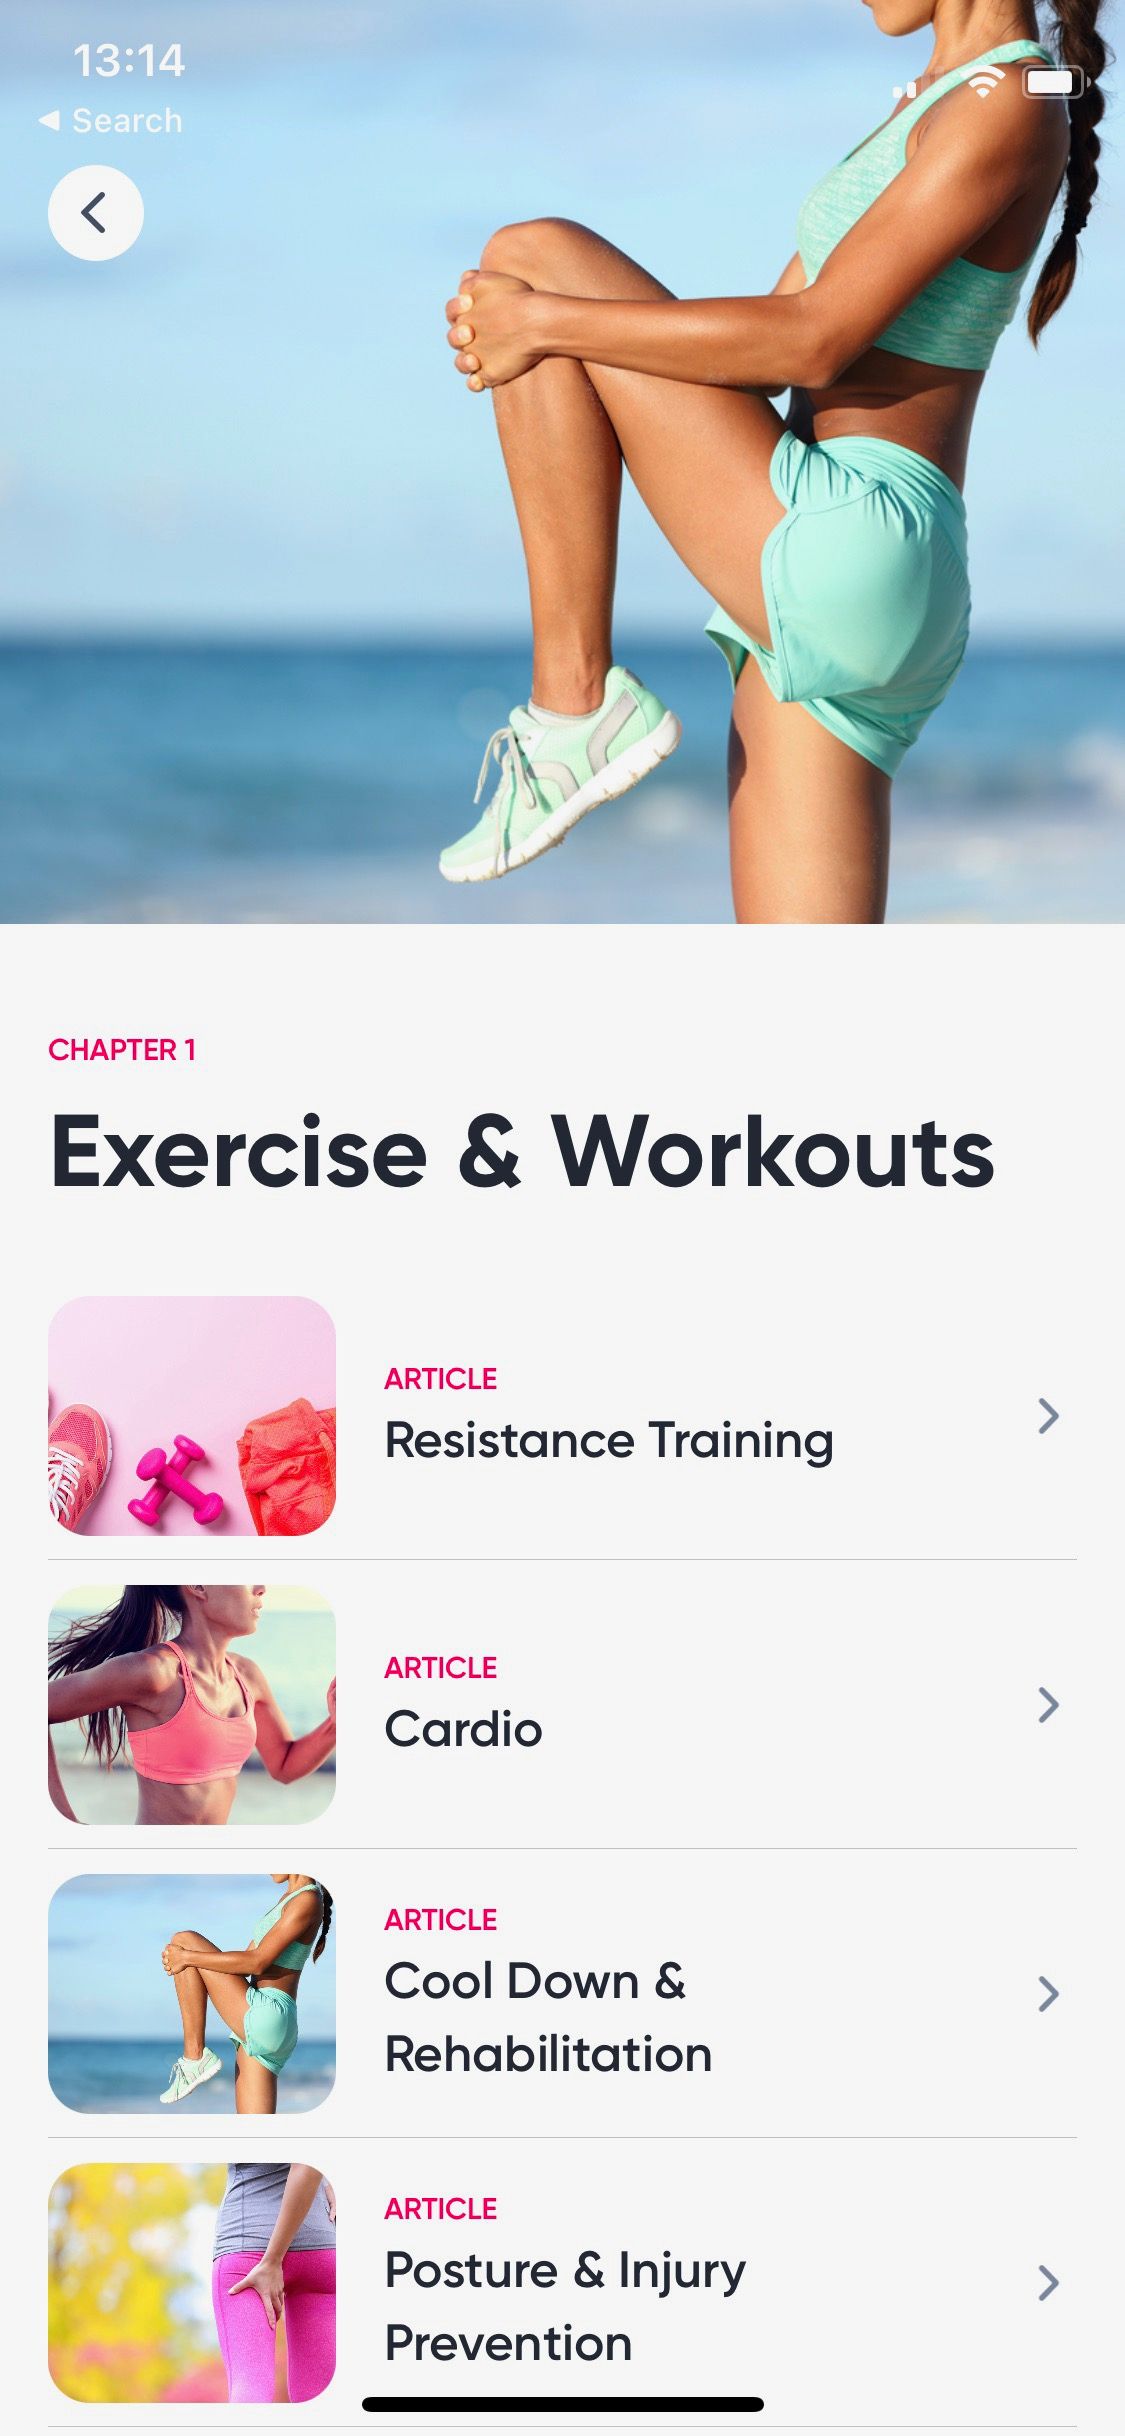 Screenshot of Sweat app showing information articles